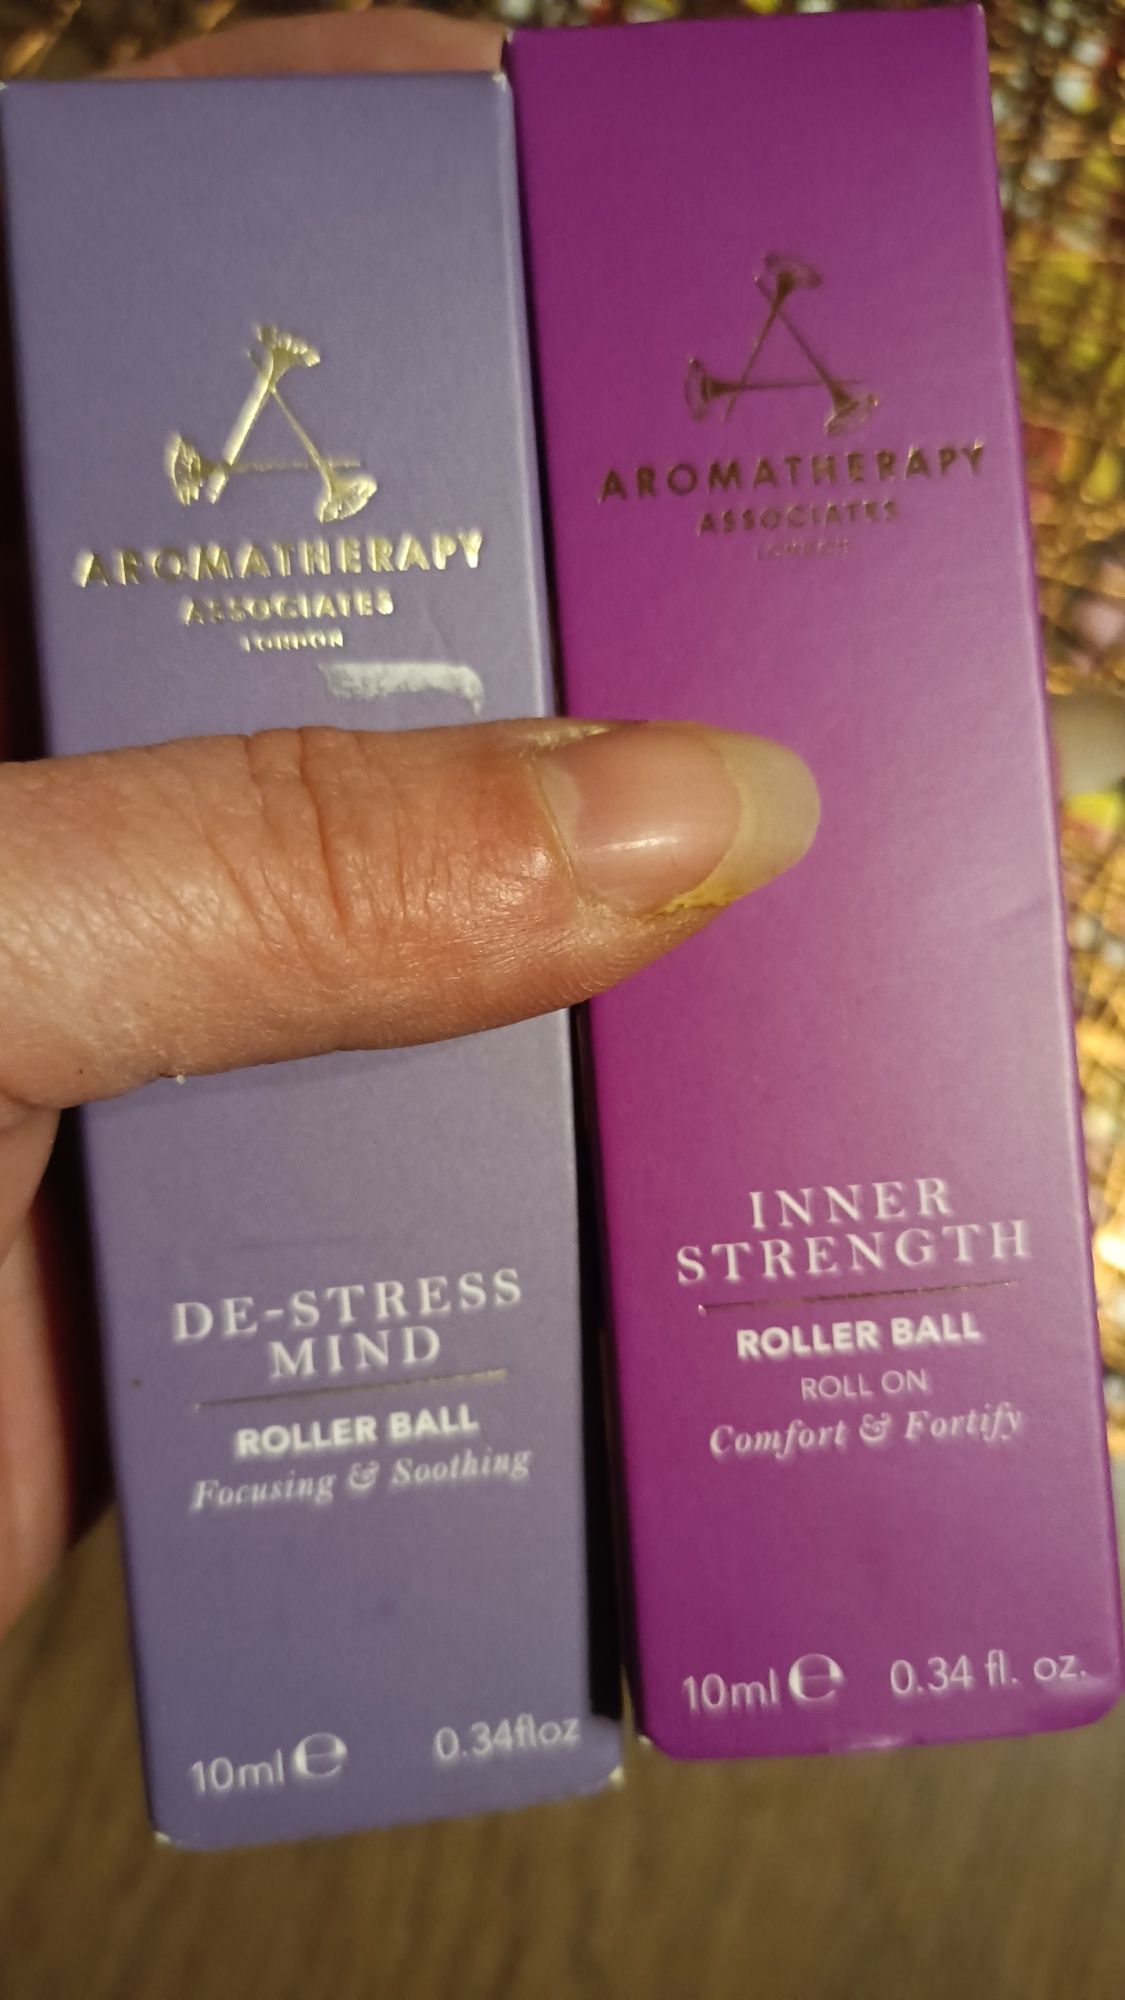 Aromatherapy associates Roller Ball De-stress mind